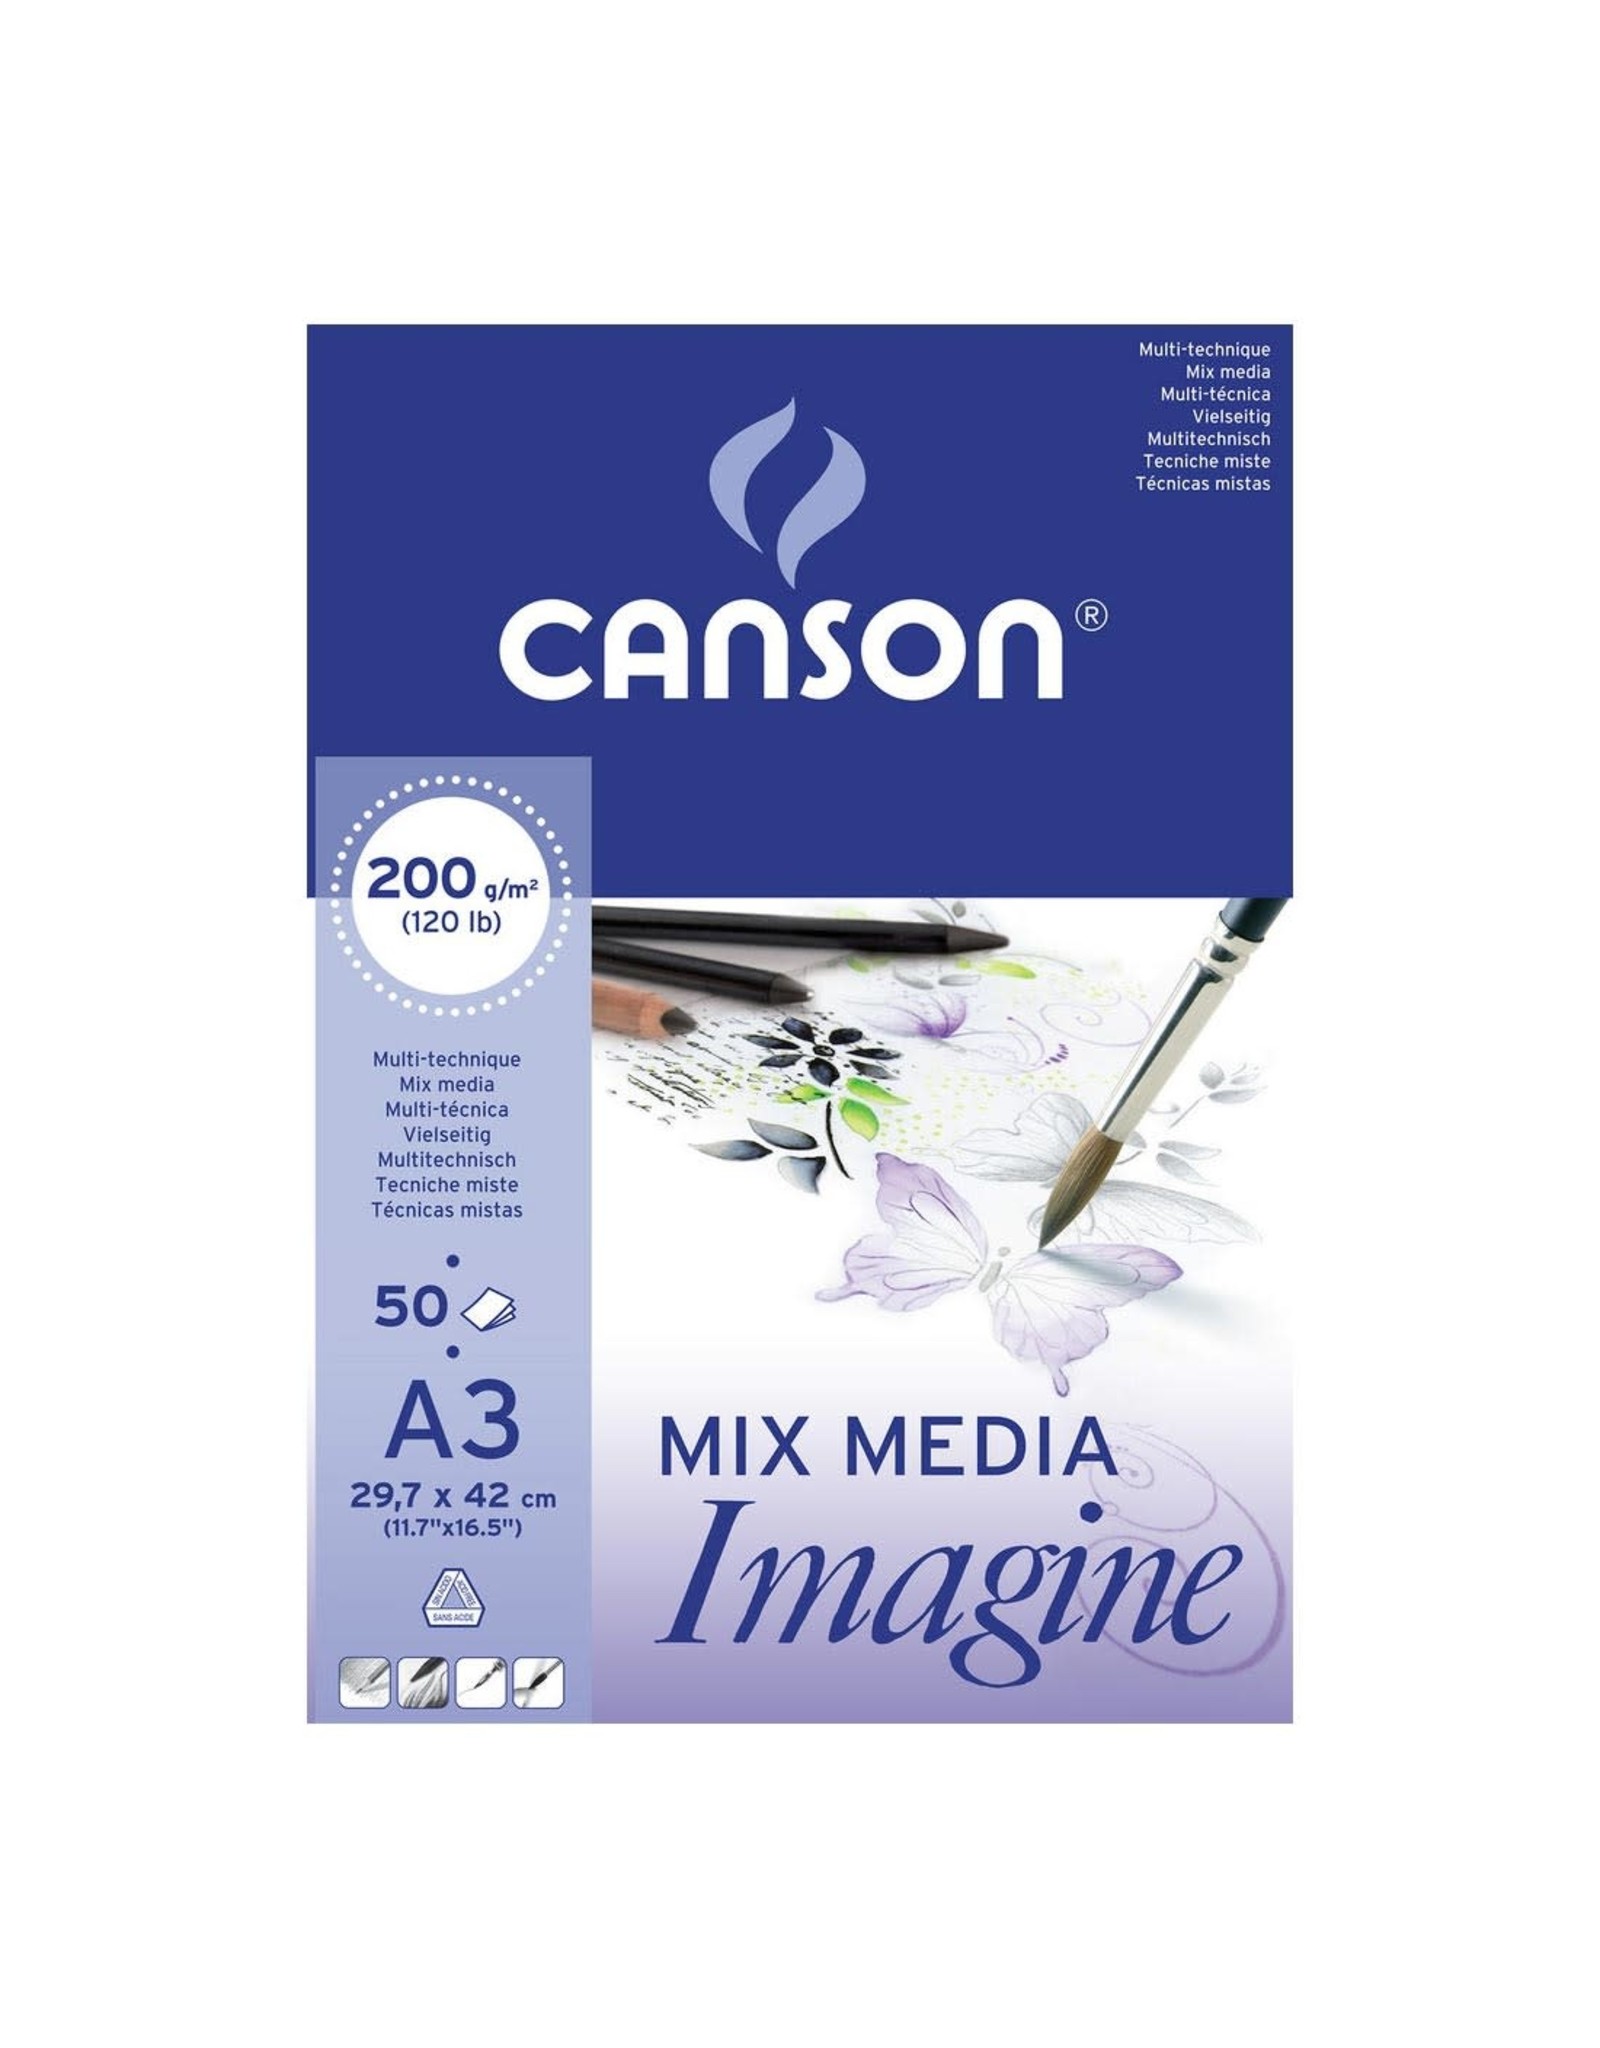 Canson Mix media imagine A3 200gr